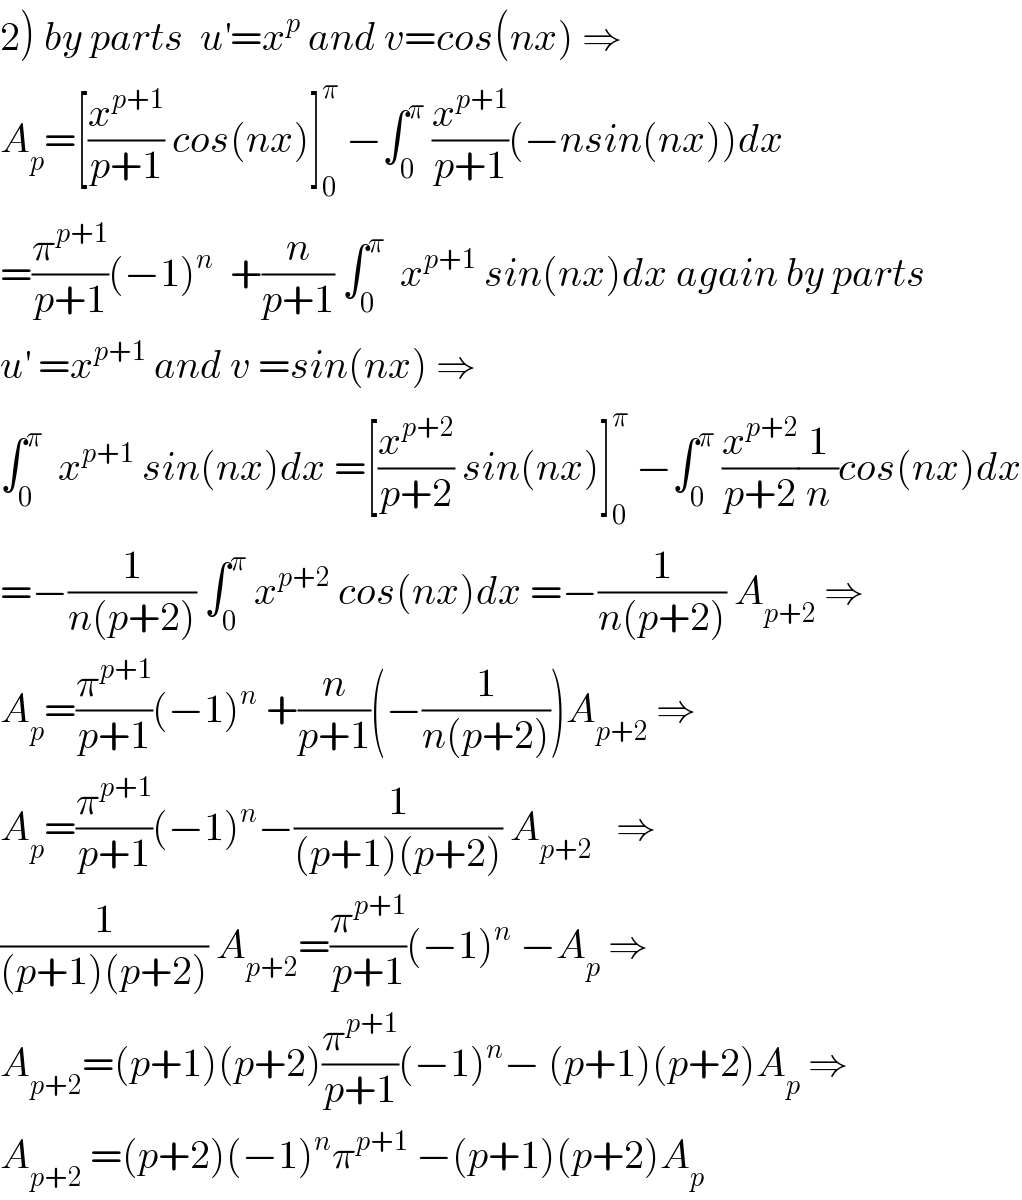 2) by parts  u^′ =x^p  and v=cos(nx) ⇒  A_p =[(x^(p+1) /(p+1)) cos(nx)]_0 ^π  −∫_0 ^π  (x^(p+1) /(p+1))(−nsin(nx))dx  =(π^(p+1) /(p+1))(−1)^n   +(n/(p+1)) ∫_0 ^π   x^(p+1)  sin(nx)dx again by parts  u^′  =x^(p+1)  and v =sin(nx) ⇒  ∫_0 ^π   x^(p+1)  sin(nx)dx =[(x^(p+2) /(p+2)) sin(nx)]_0 ^π  −∫_0 ^π  (x^(p+2) /(p+2))(1/n)cos(nx)dx  =−(1/(n(p+2))) ∫_0 ^π  x^(p+2)  cos(nx)dx =−(1/(n(p+2))) A_(p+2)  ⇒  A_p =(π^(p+1) /(p+1))(−1)^n  +(n/(p+1))(−(1/(n(p+2))))A_(p+2)  ⇒  A_p =(π^(p+1) /(p+1))(−1)^n −(1/((p+1)(p+2))) A_(p+2)    ⇒  (1/((p+1)(p+2))) A_(p+2) =(π^(p+1) /(p+1))(−1)^n  −A_p  ⇒  A_(p+2) =(p+1)(p+2)(π^(p+1) /(p+1))(−1)^n − (p+1)(p+2)A_p  ⇒  A_(p+2)  =(p+2)(−1)^n π^(p+1)  −(p+1)(p+2)A_p   